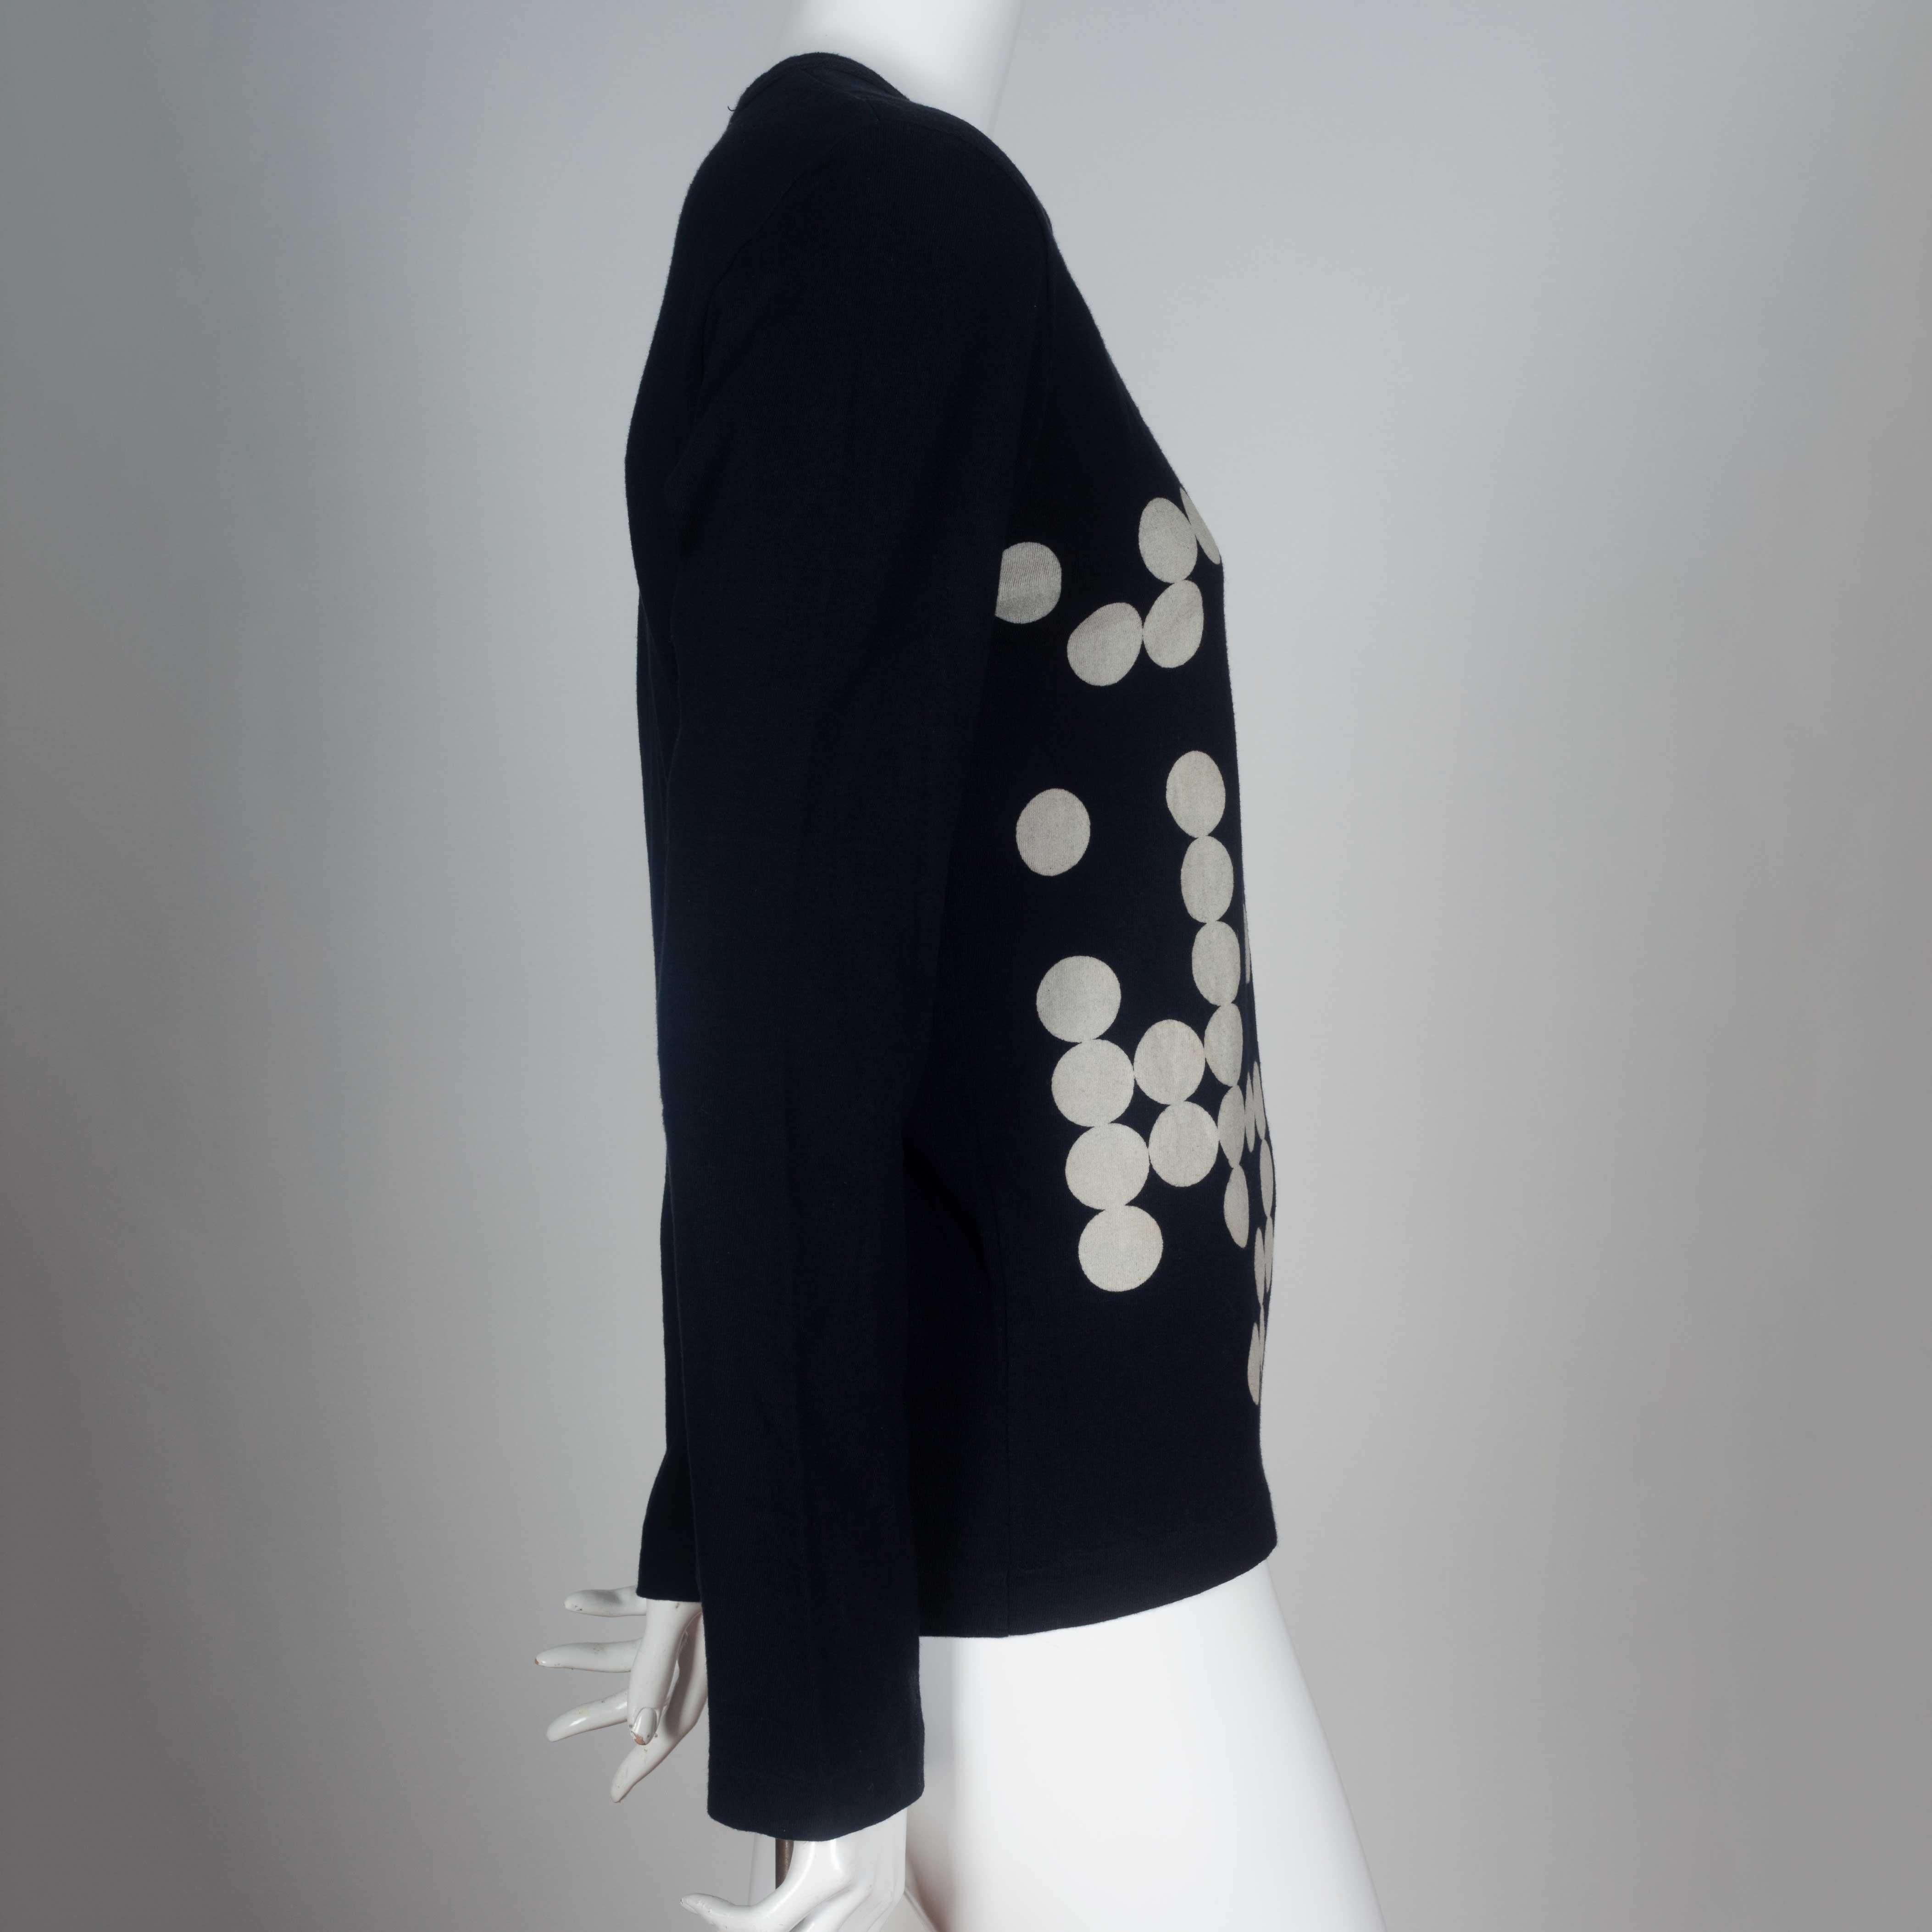 Black Comme des Garçons Long Sleeve Cotton Shirt with Circles, 2009